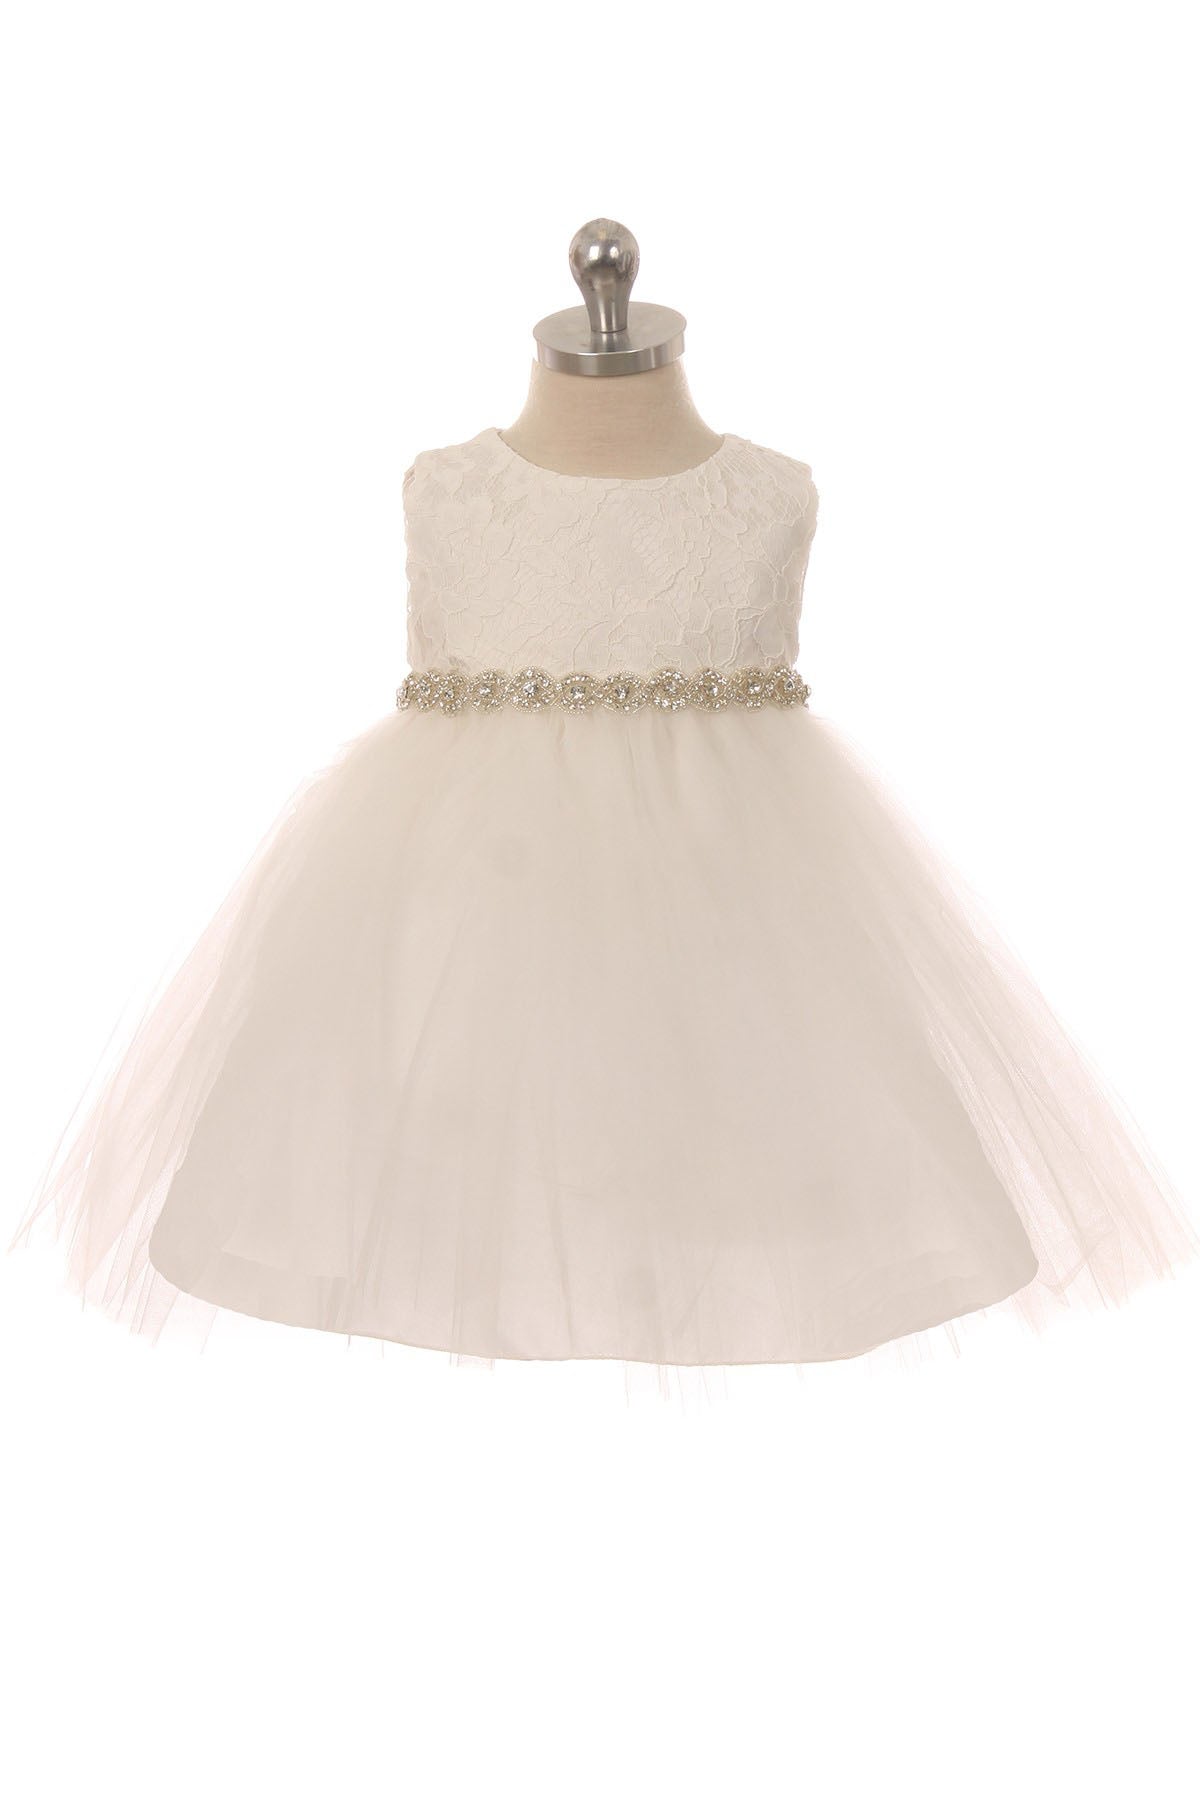 Anastasia Baby Girls Lace Top Dress - Off White - Rhinestone Trim♥ - Grandma's Little Darlings